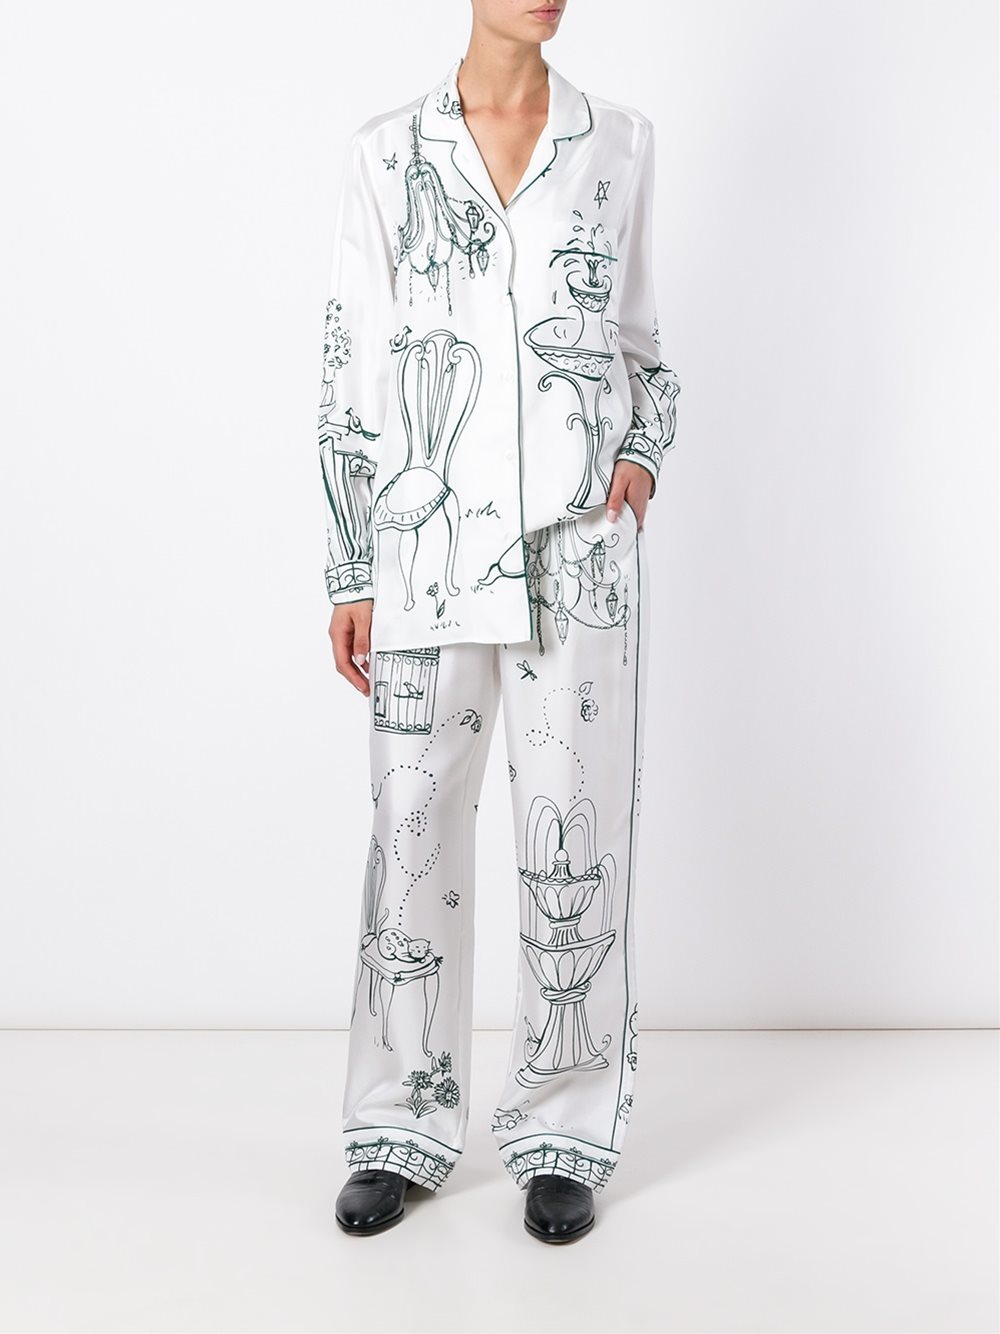 Dolce & Gabbana Silk Garden Print Pyjama Shirt in White - Lyst